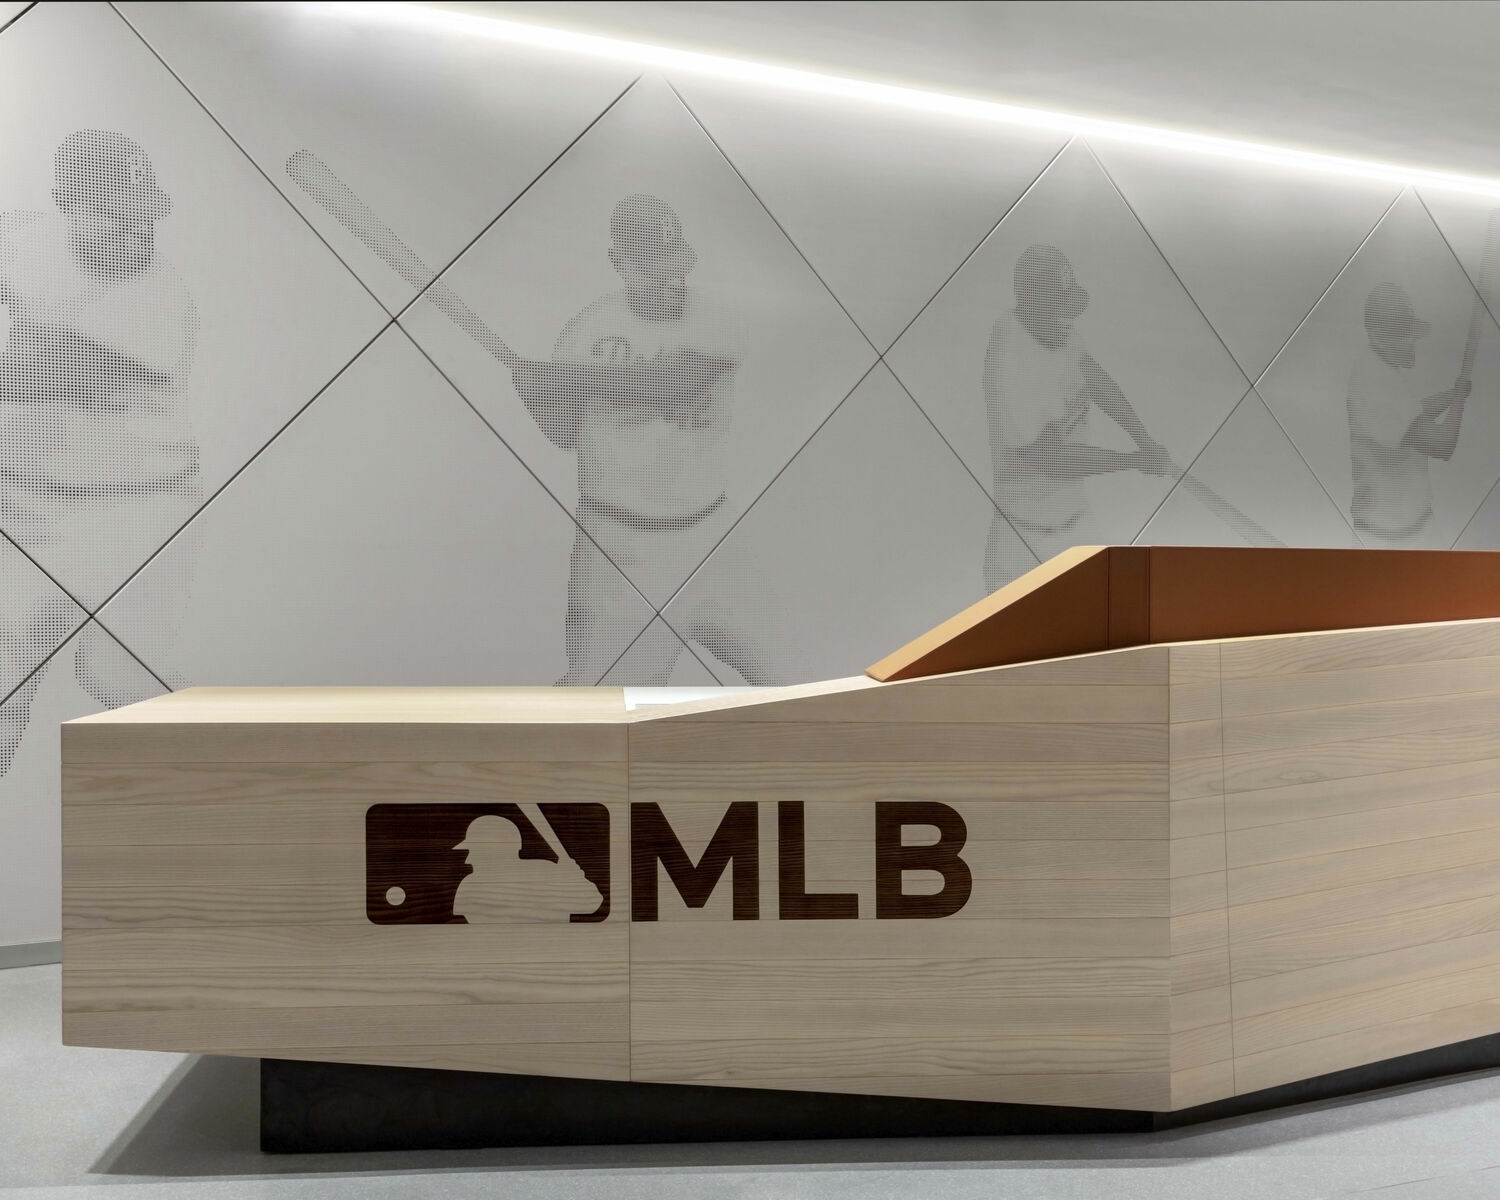 Major League Baseball Headquarters